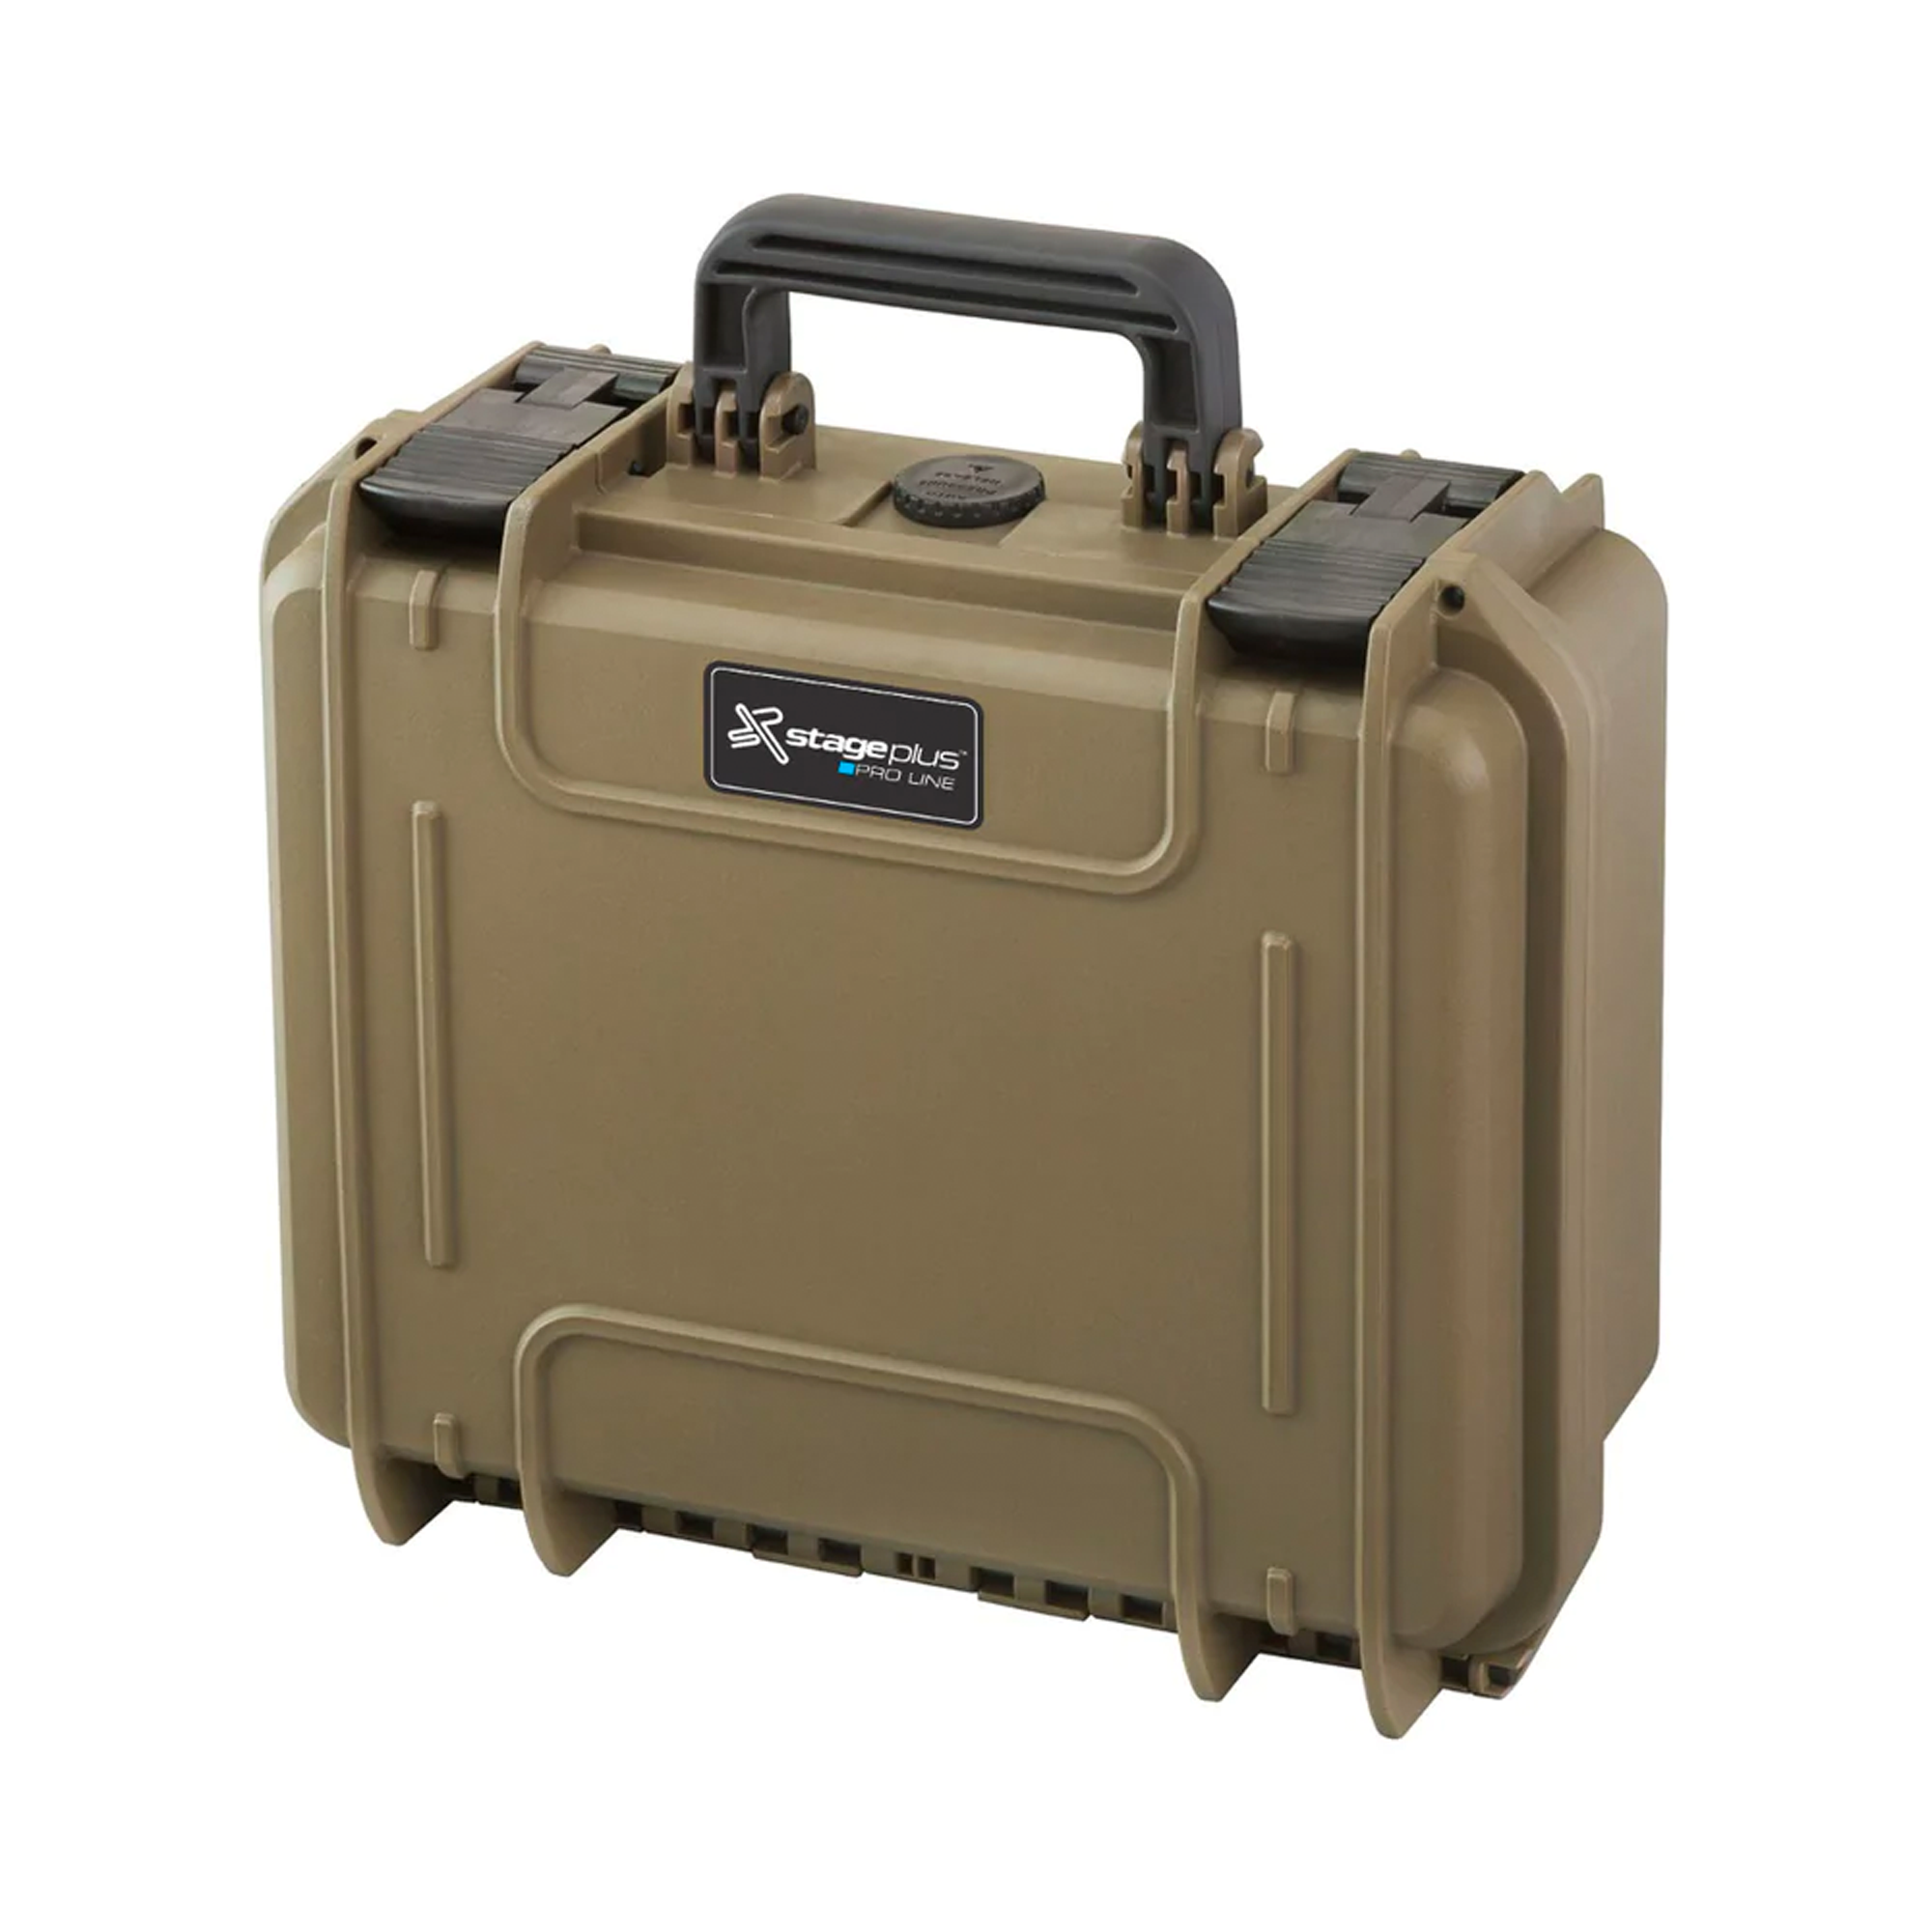 Stage Plus PRO 300S Sahara Carry Case, Cubed Foam, ID: L300xW225xH132mm